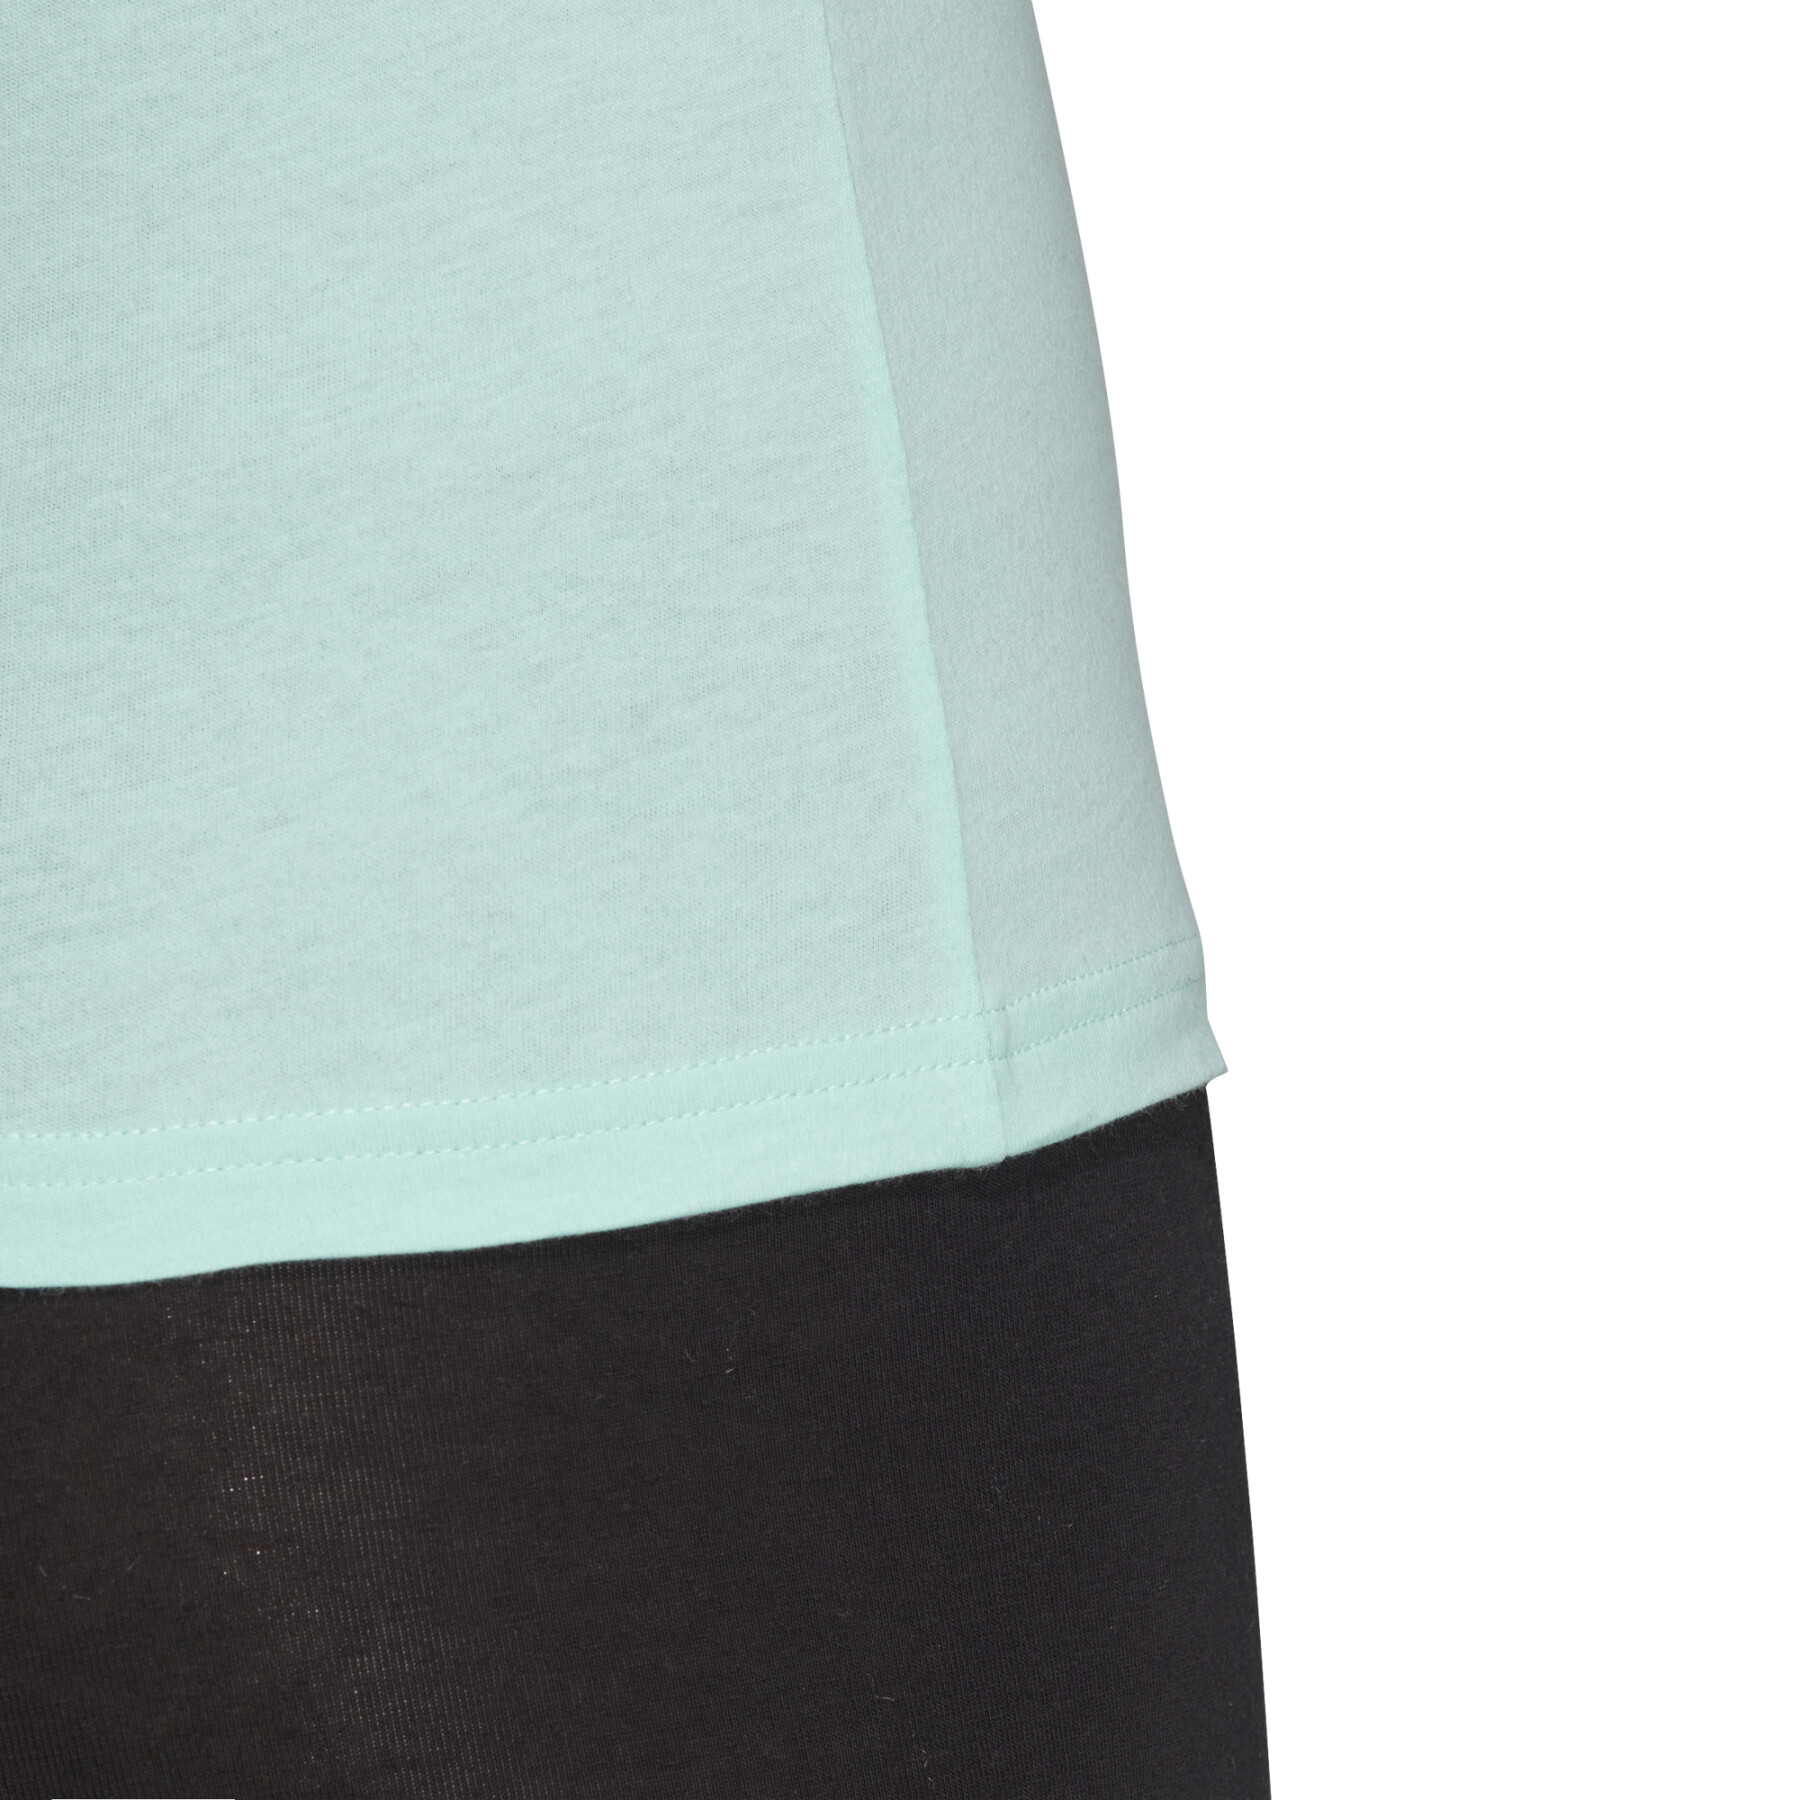 Koszulka damska adidas Essentials Linear